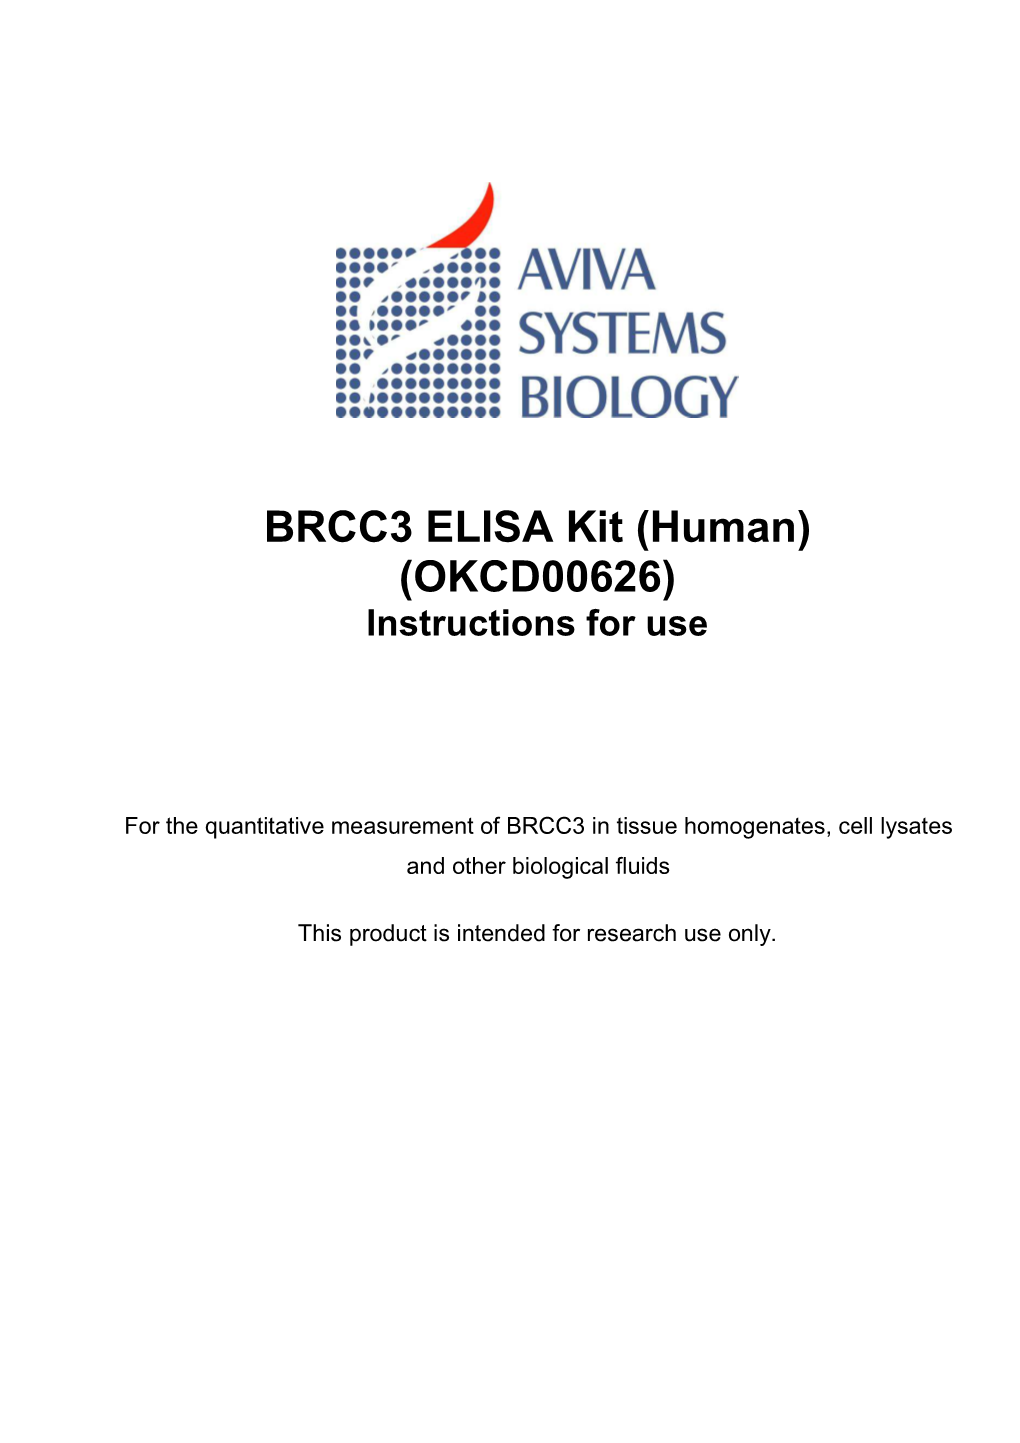 BRCC3 ELISA Kit (Human) (OKCD00626) Instructions for Use